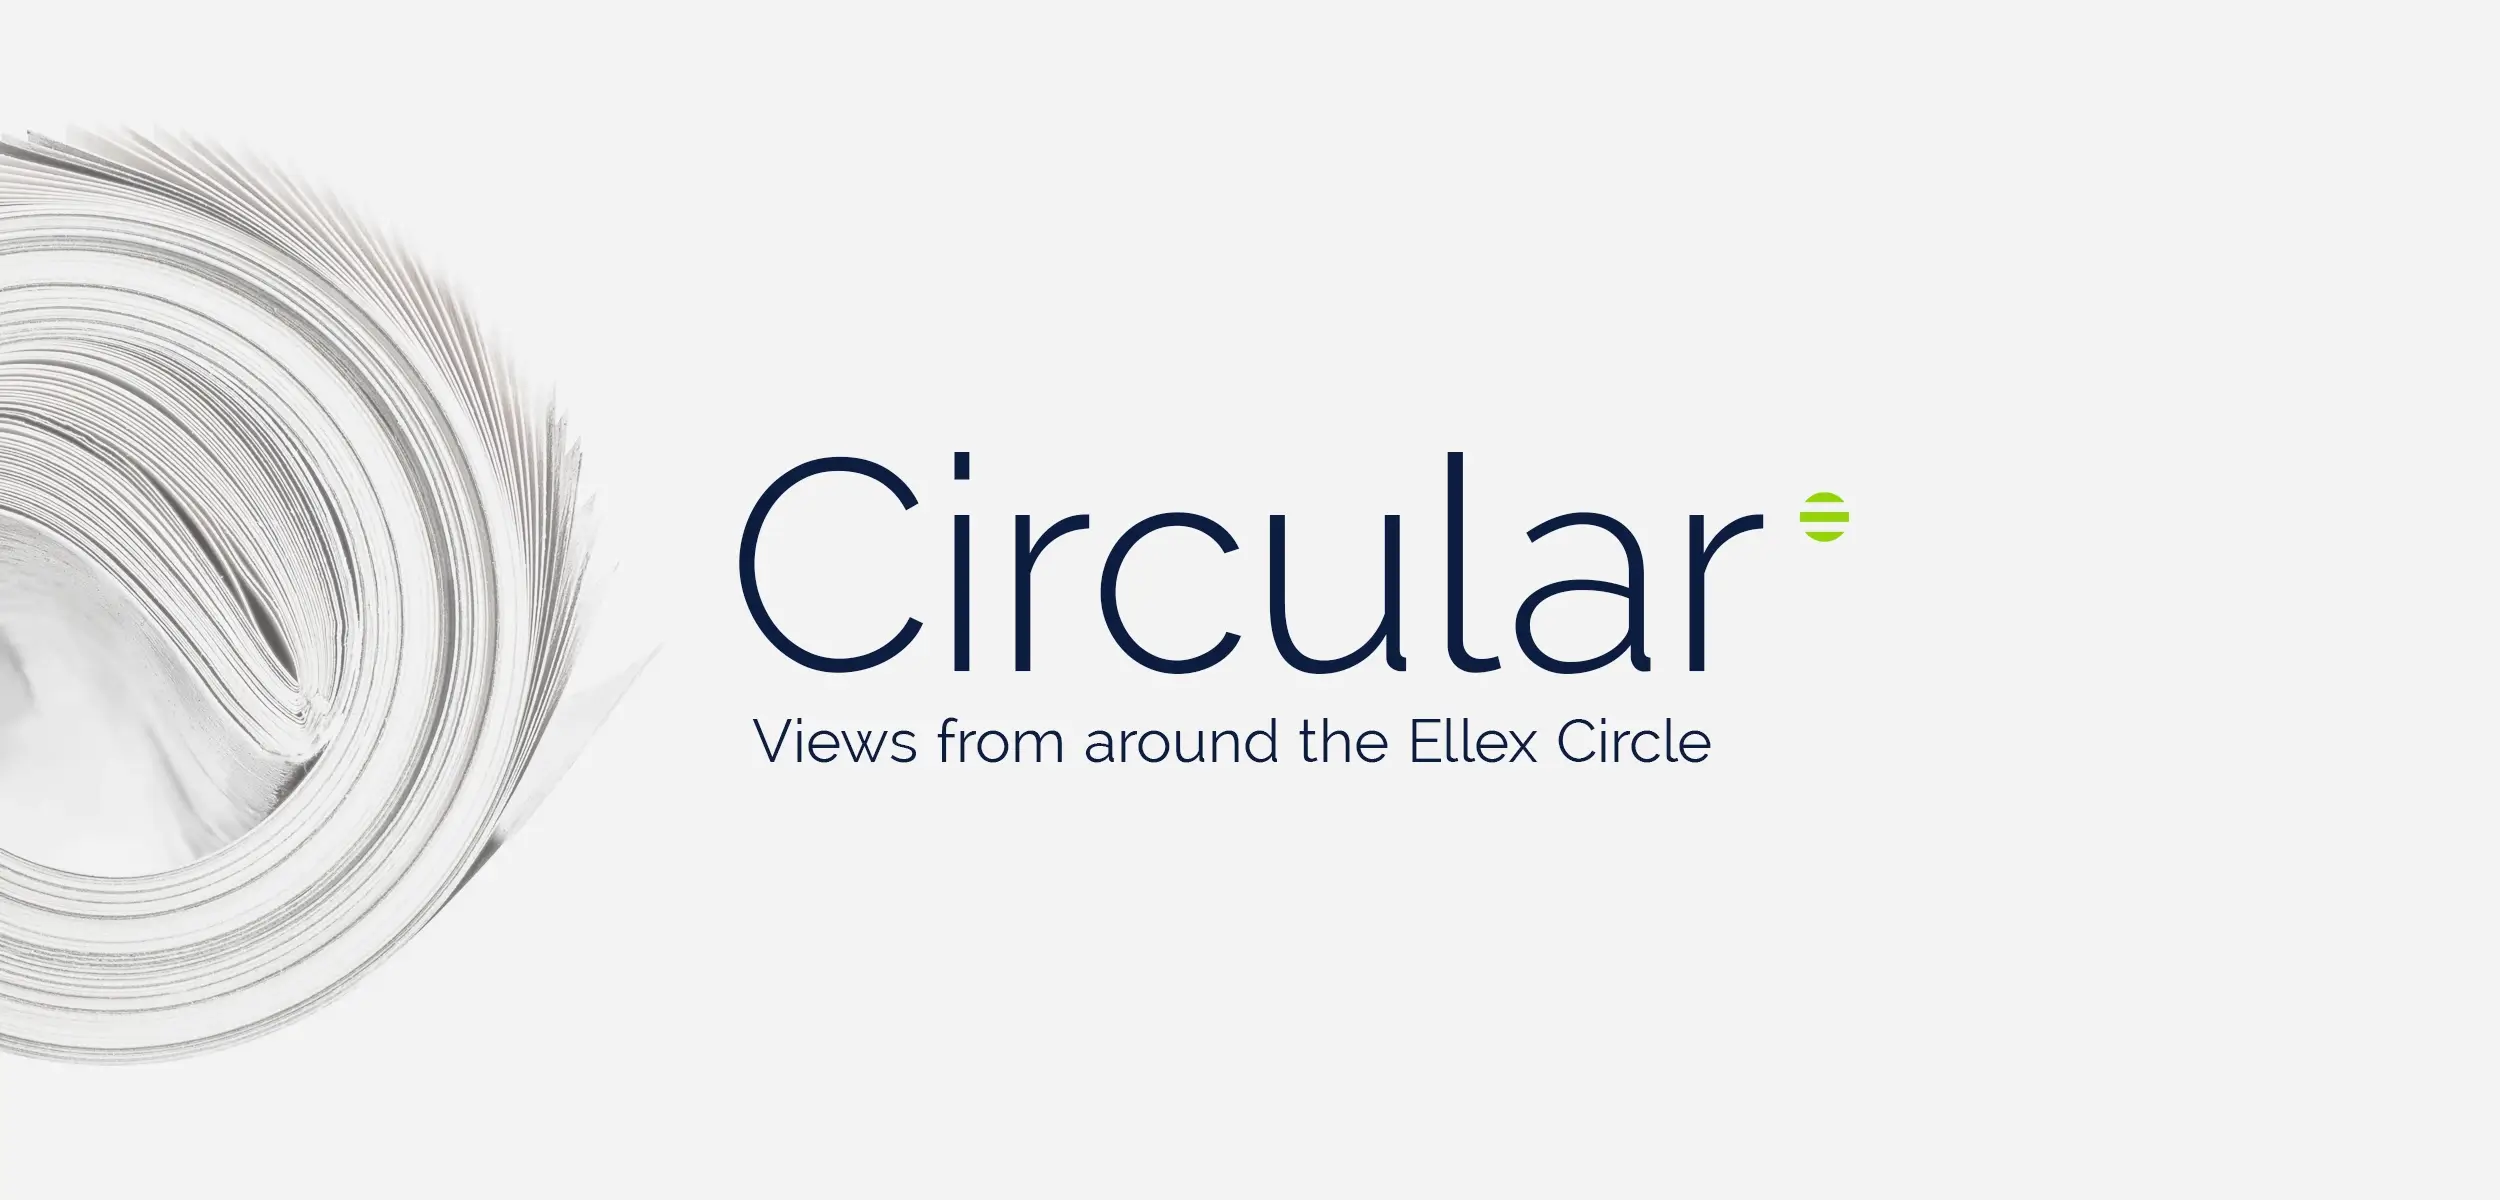 Ellex Circular Newsletter naming by Peek Creative Limited